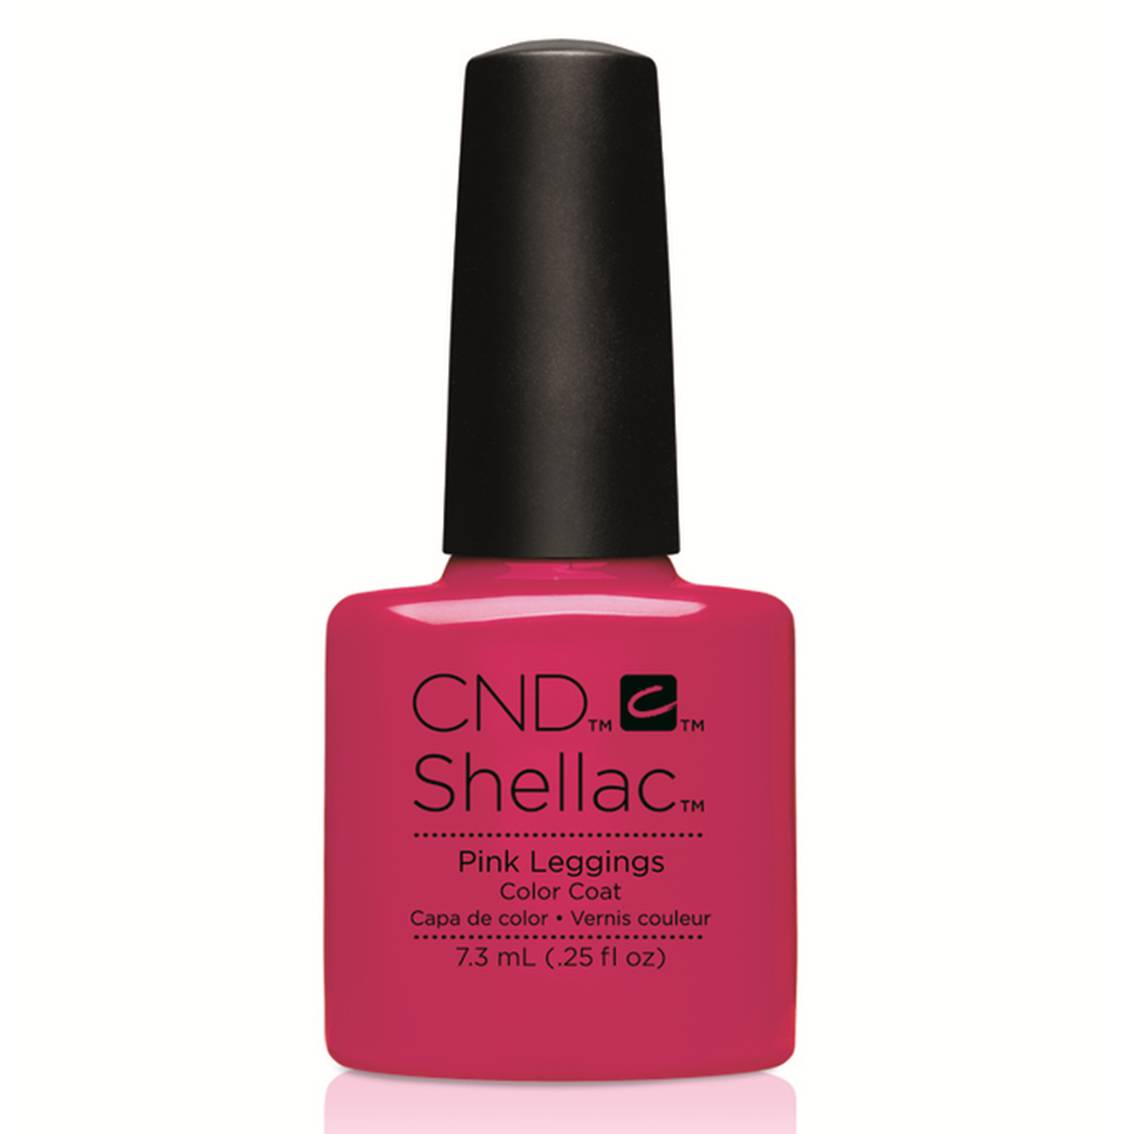 CND™ SHELLAC™ Pink Leggings